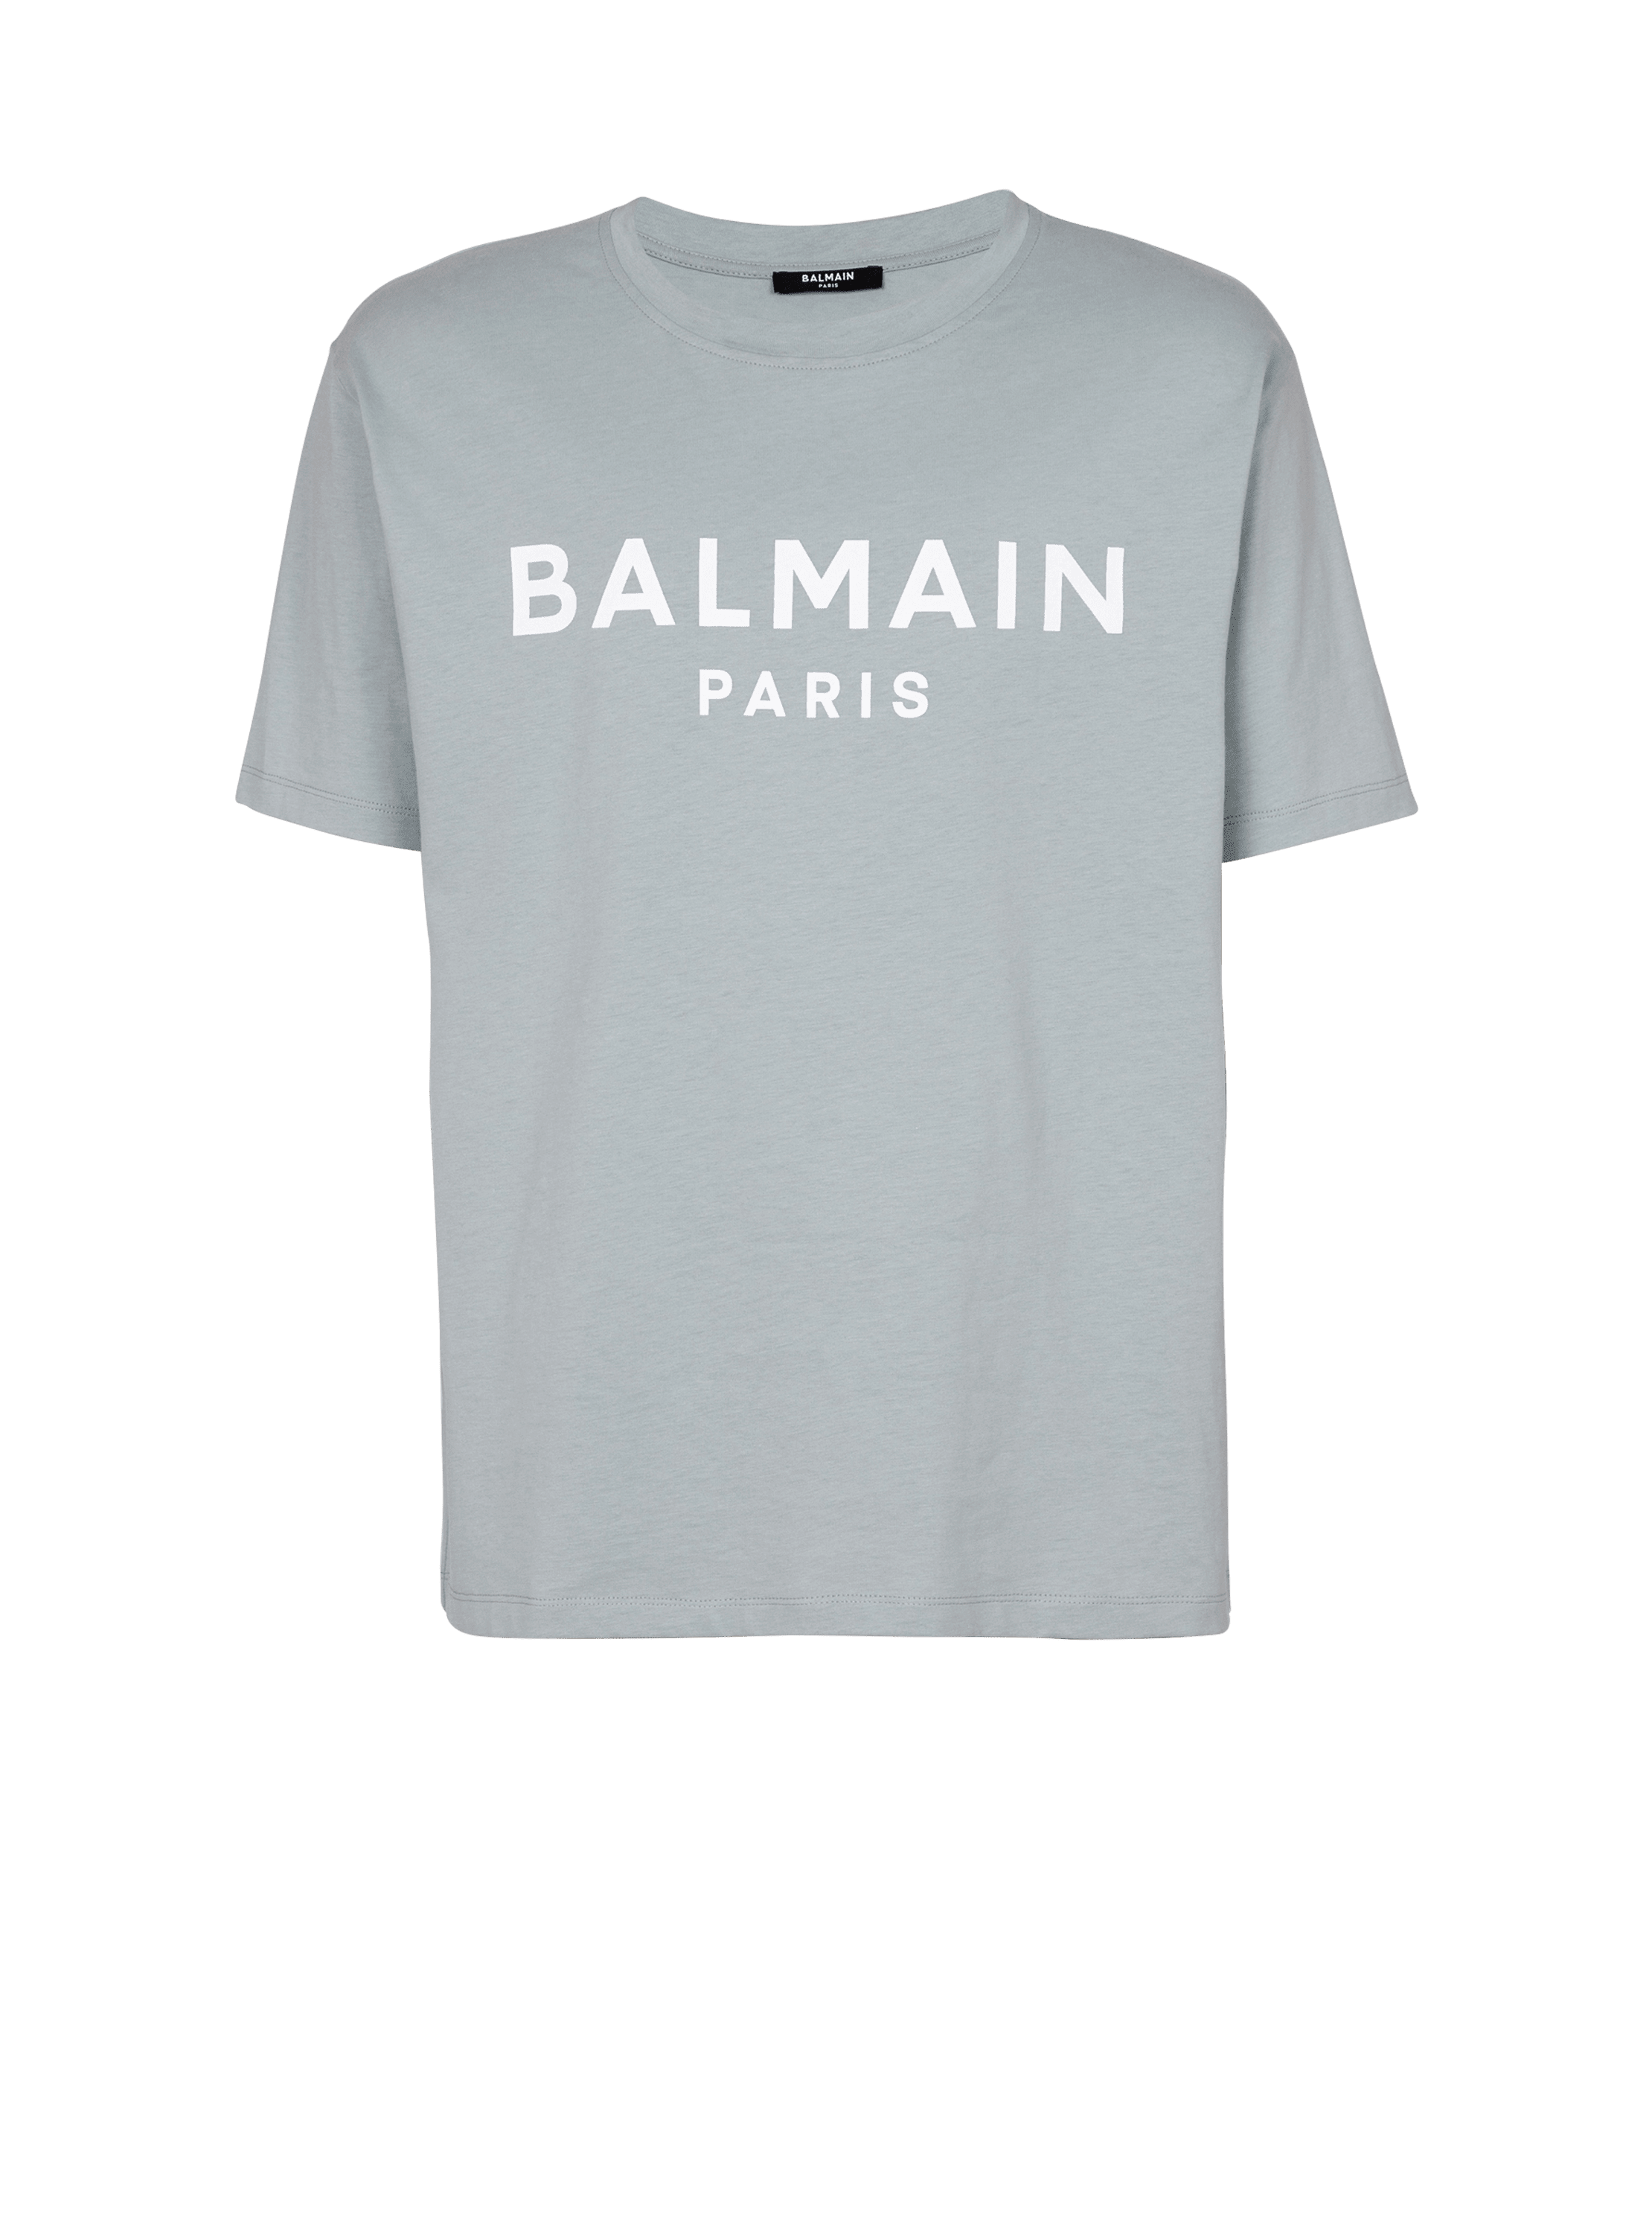 Printed Balmain Paris short-sleeved T-shirt